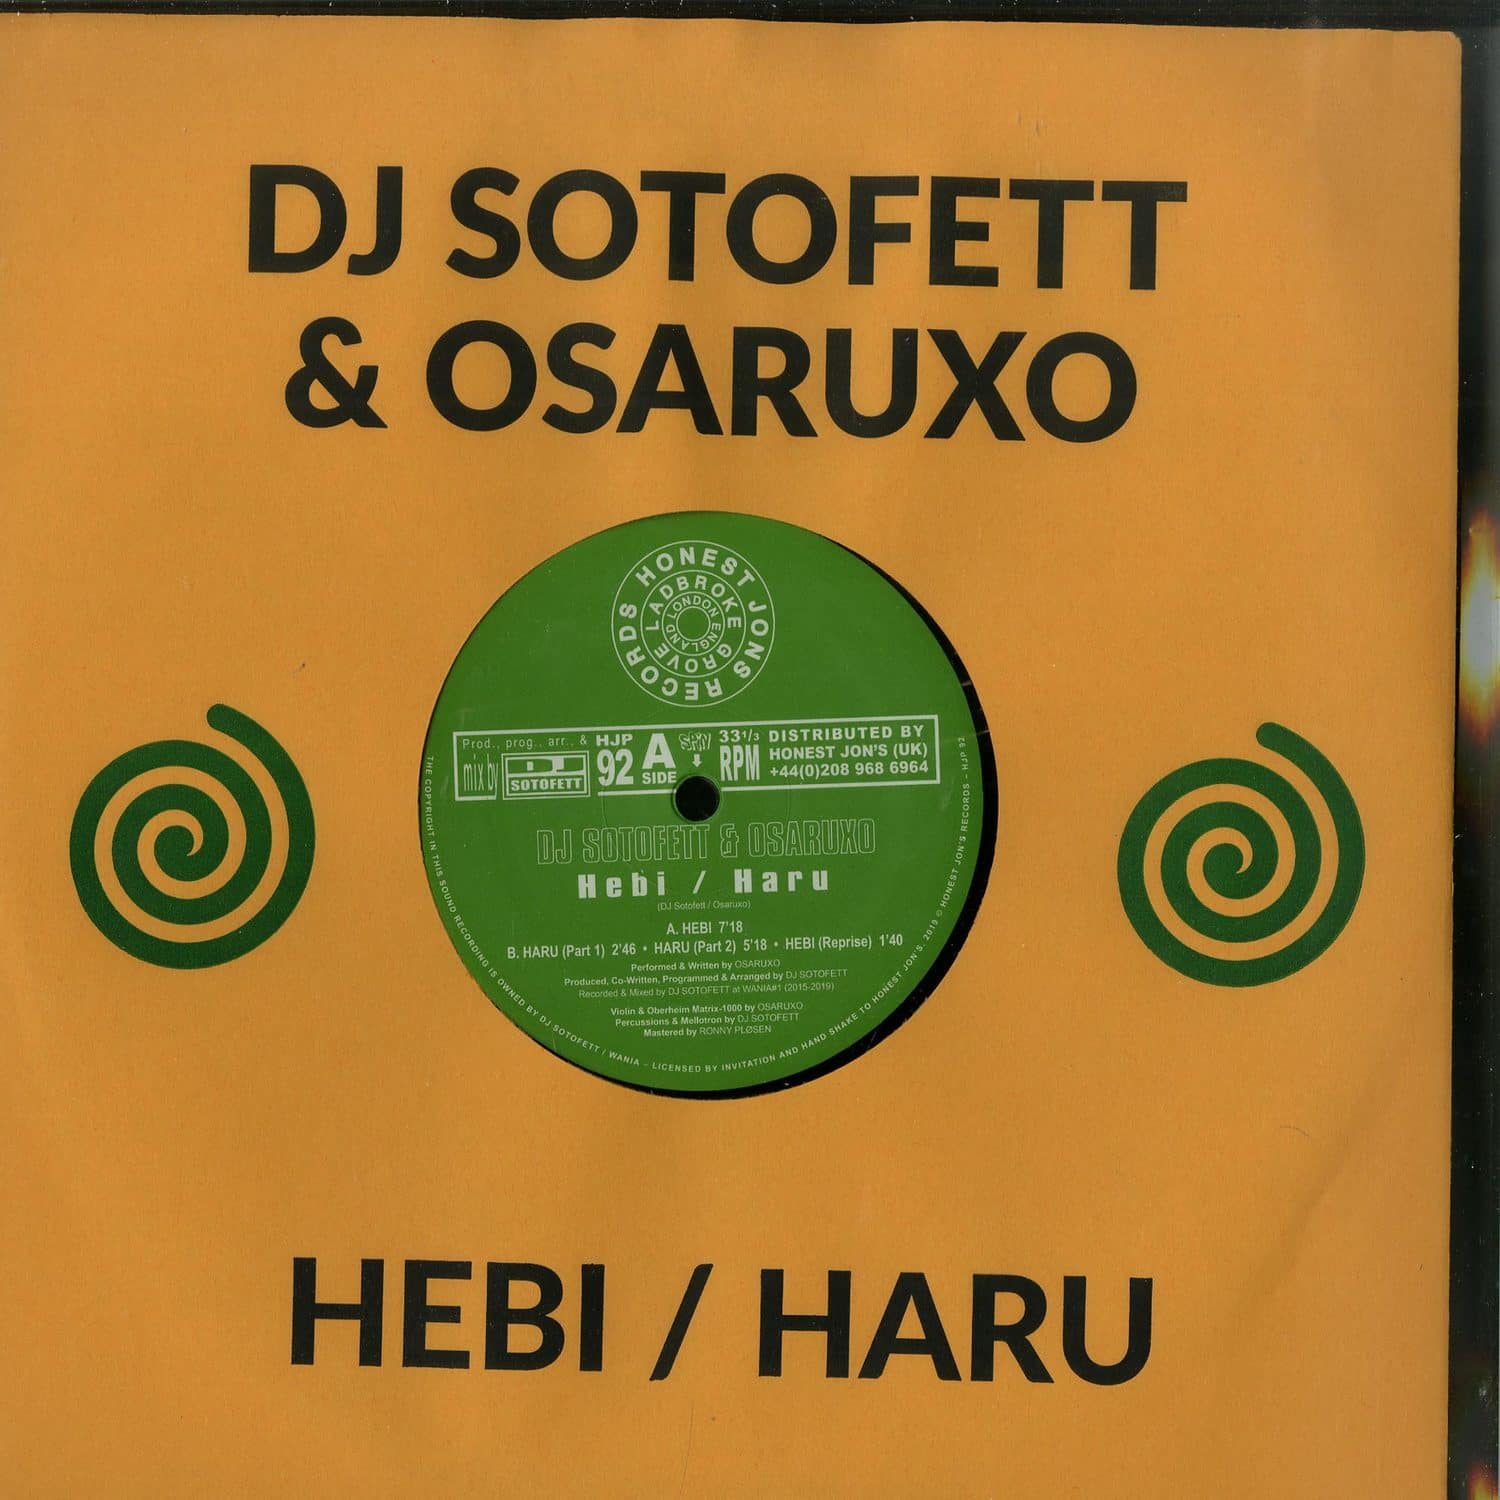 DJ Sotofett & Osaruxo - HEBI / HARU 